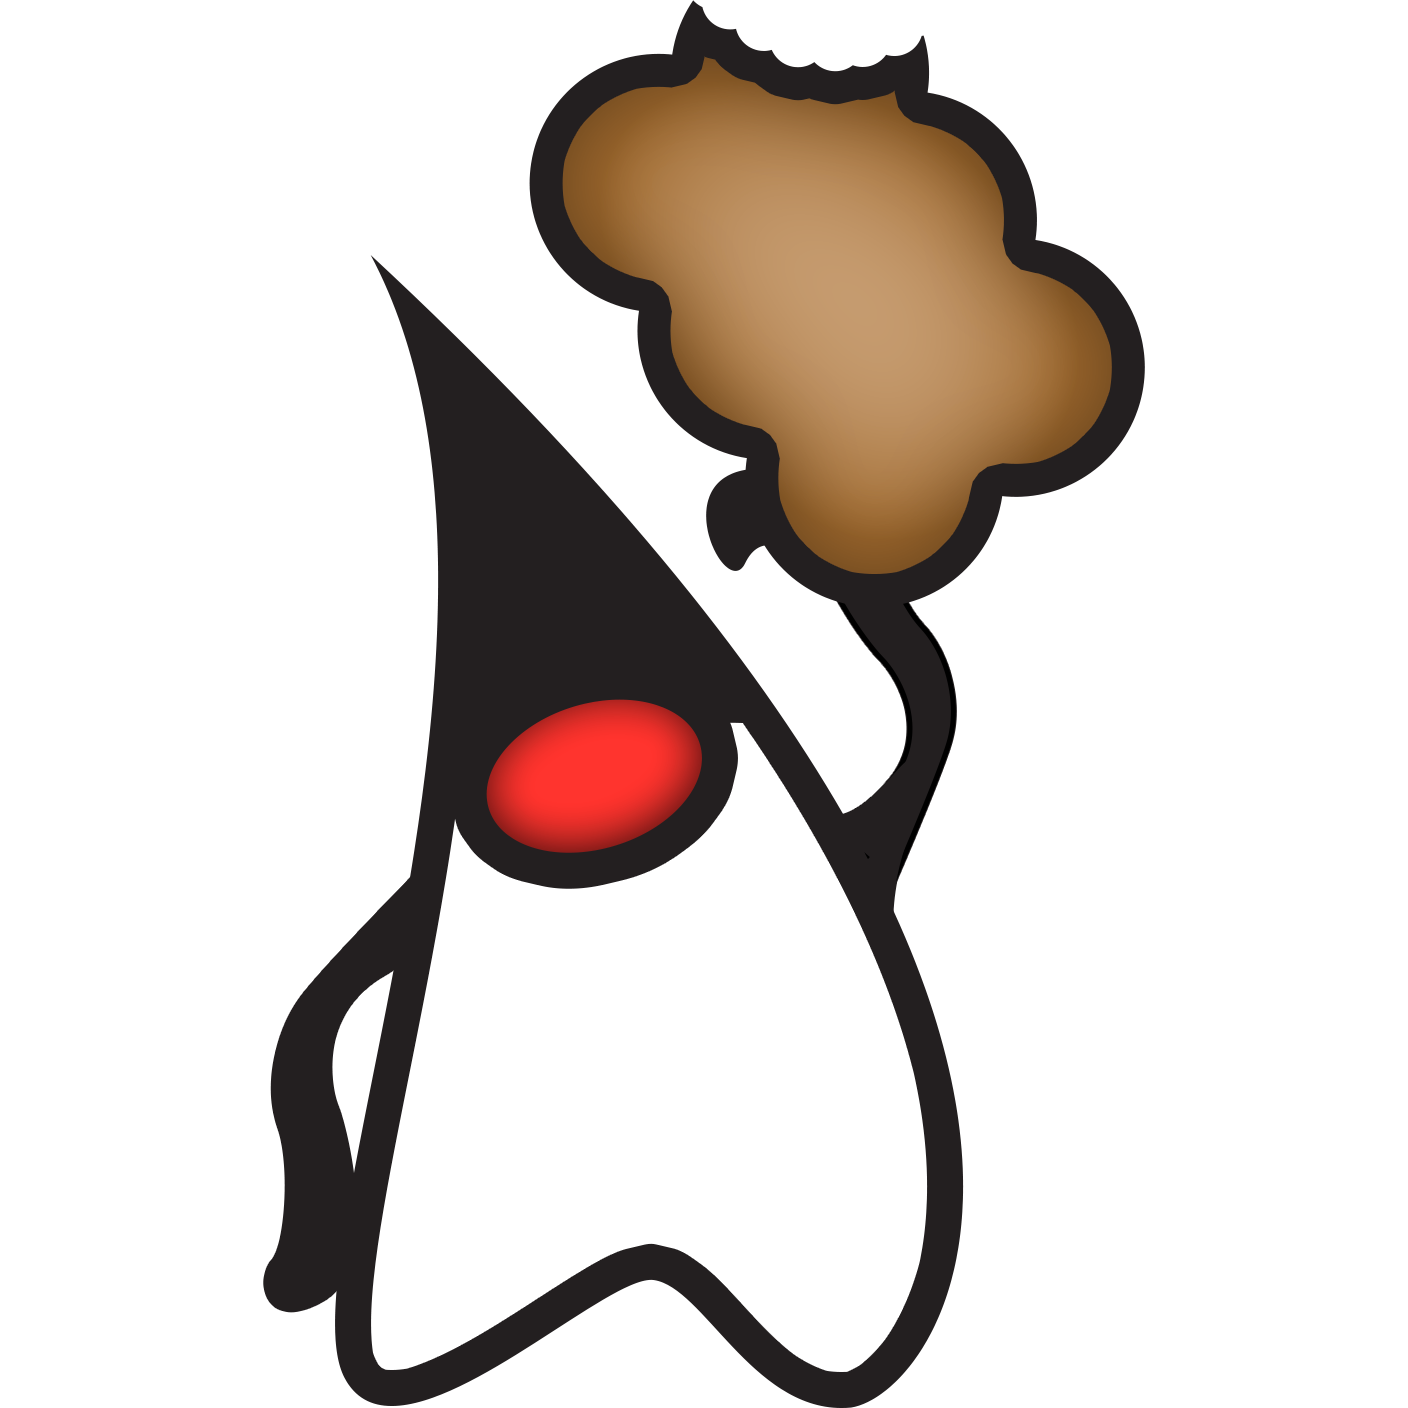 Toruń JUG // #Java #JVM #programming #tech #code //
Also subscribe: 
https://t.co/UwsFeux4Oe |
https://t.co/ET75xDHYe6 |
https://t.co/VSjjF1QFla